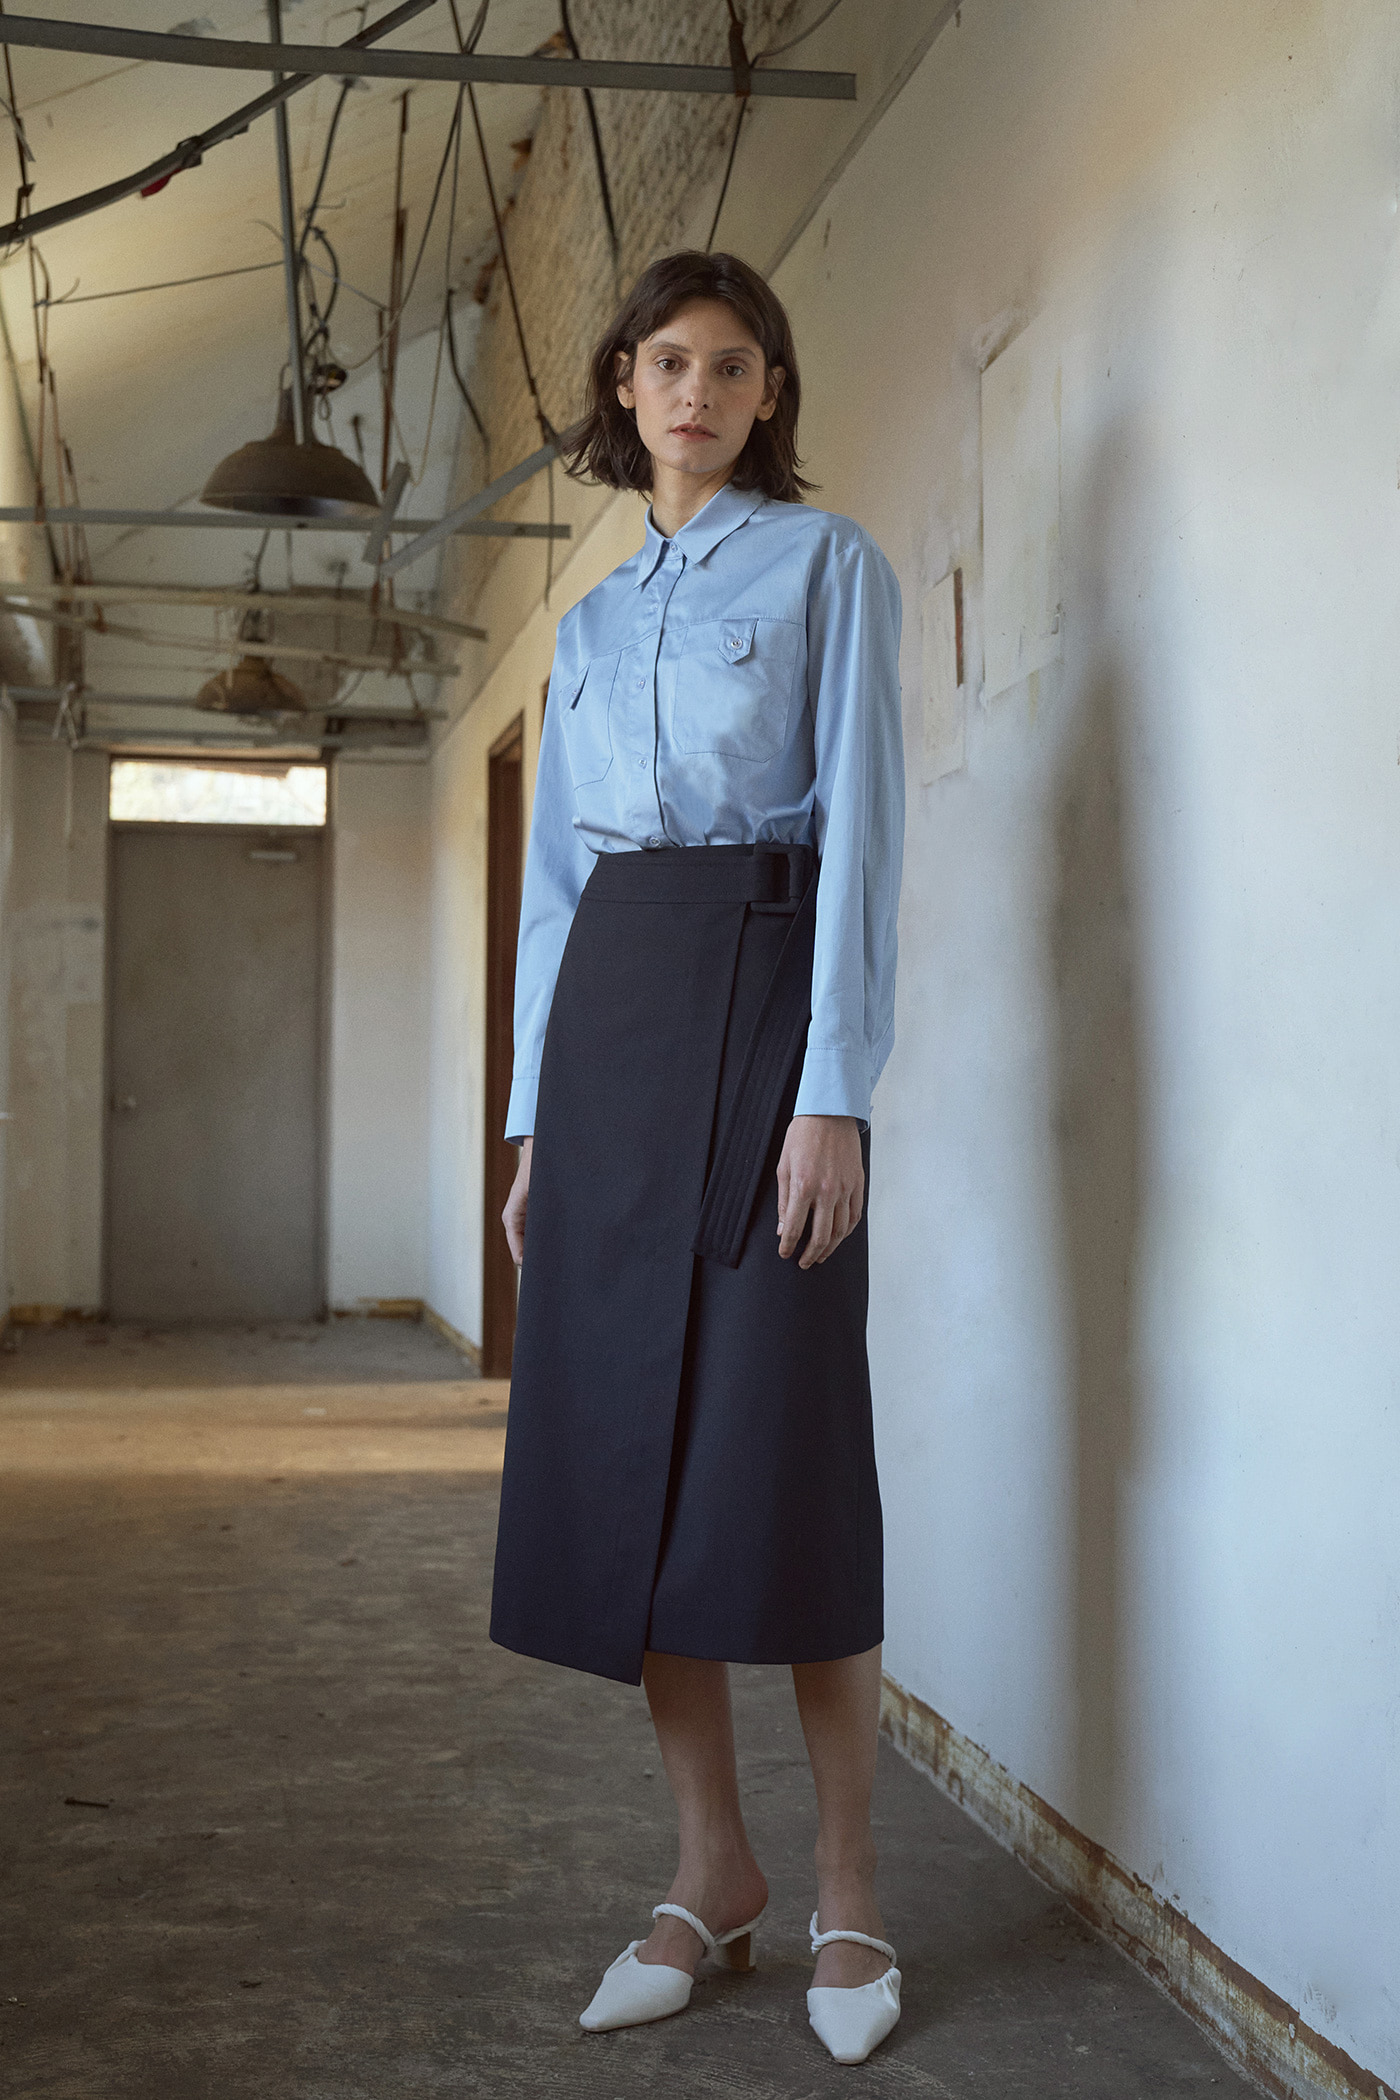 [SAMPLE][박하나 착용]Wool Stitch lap skirt-Navy